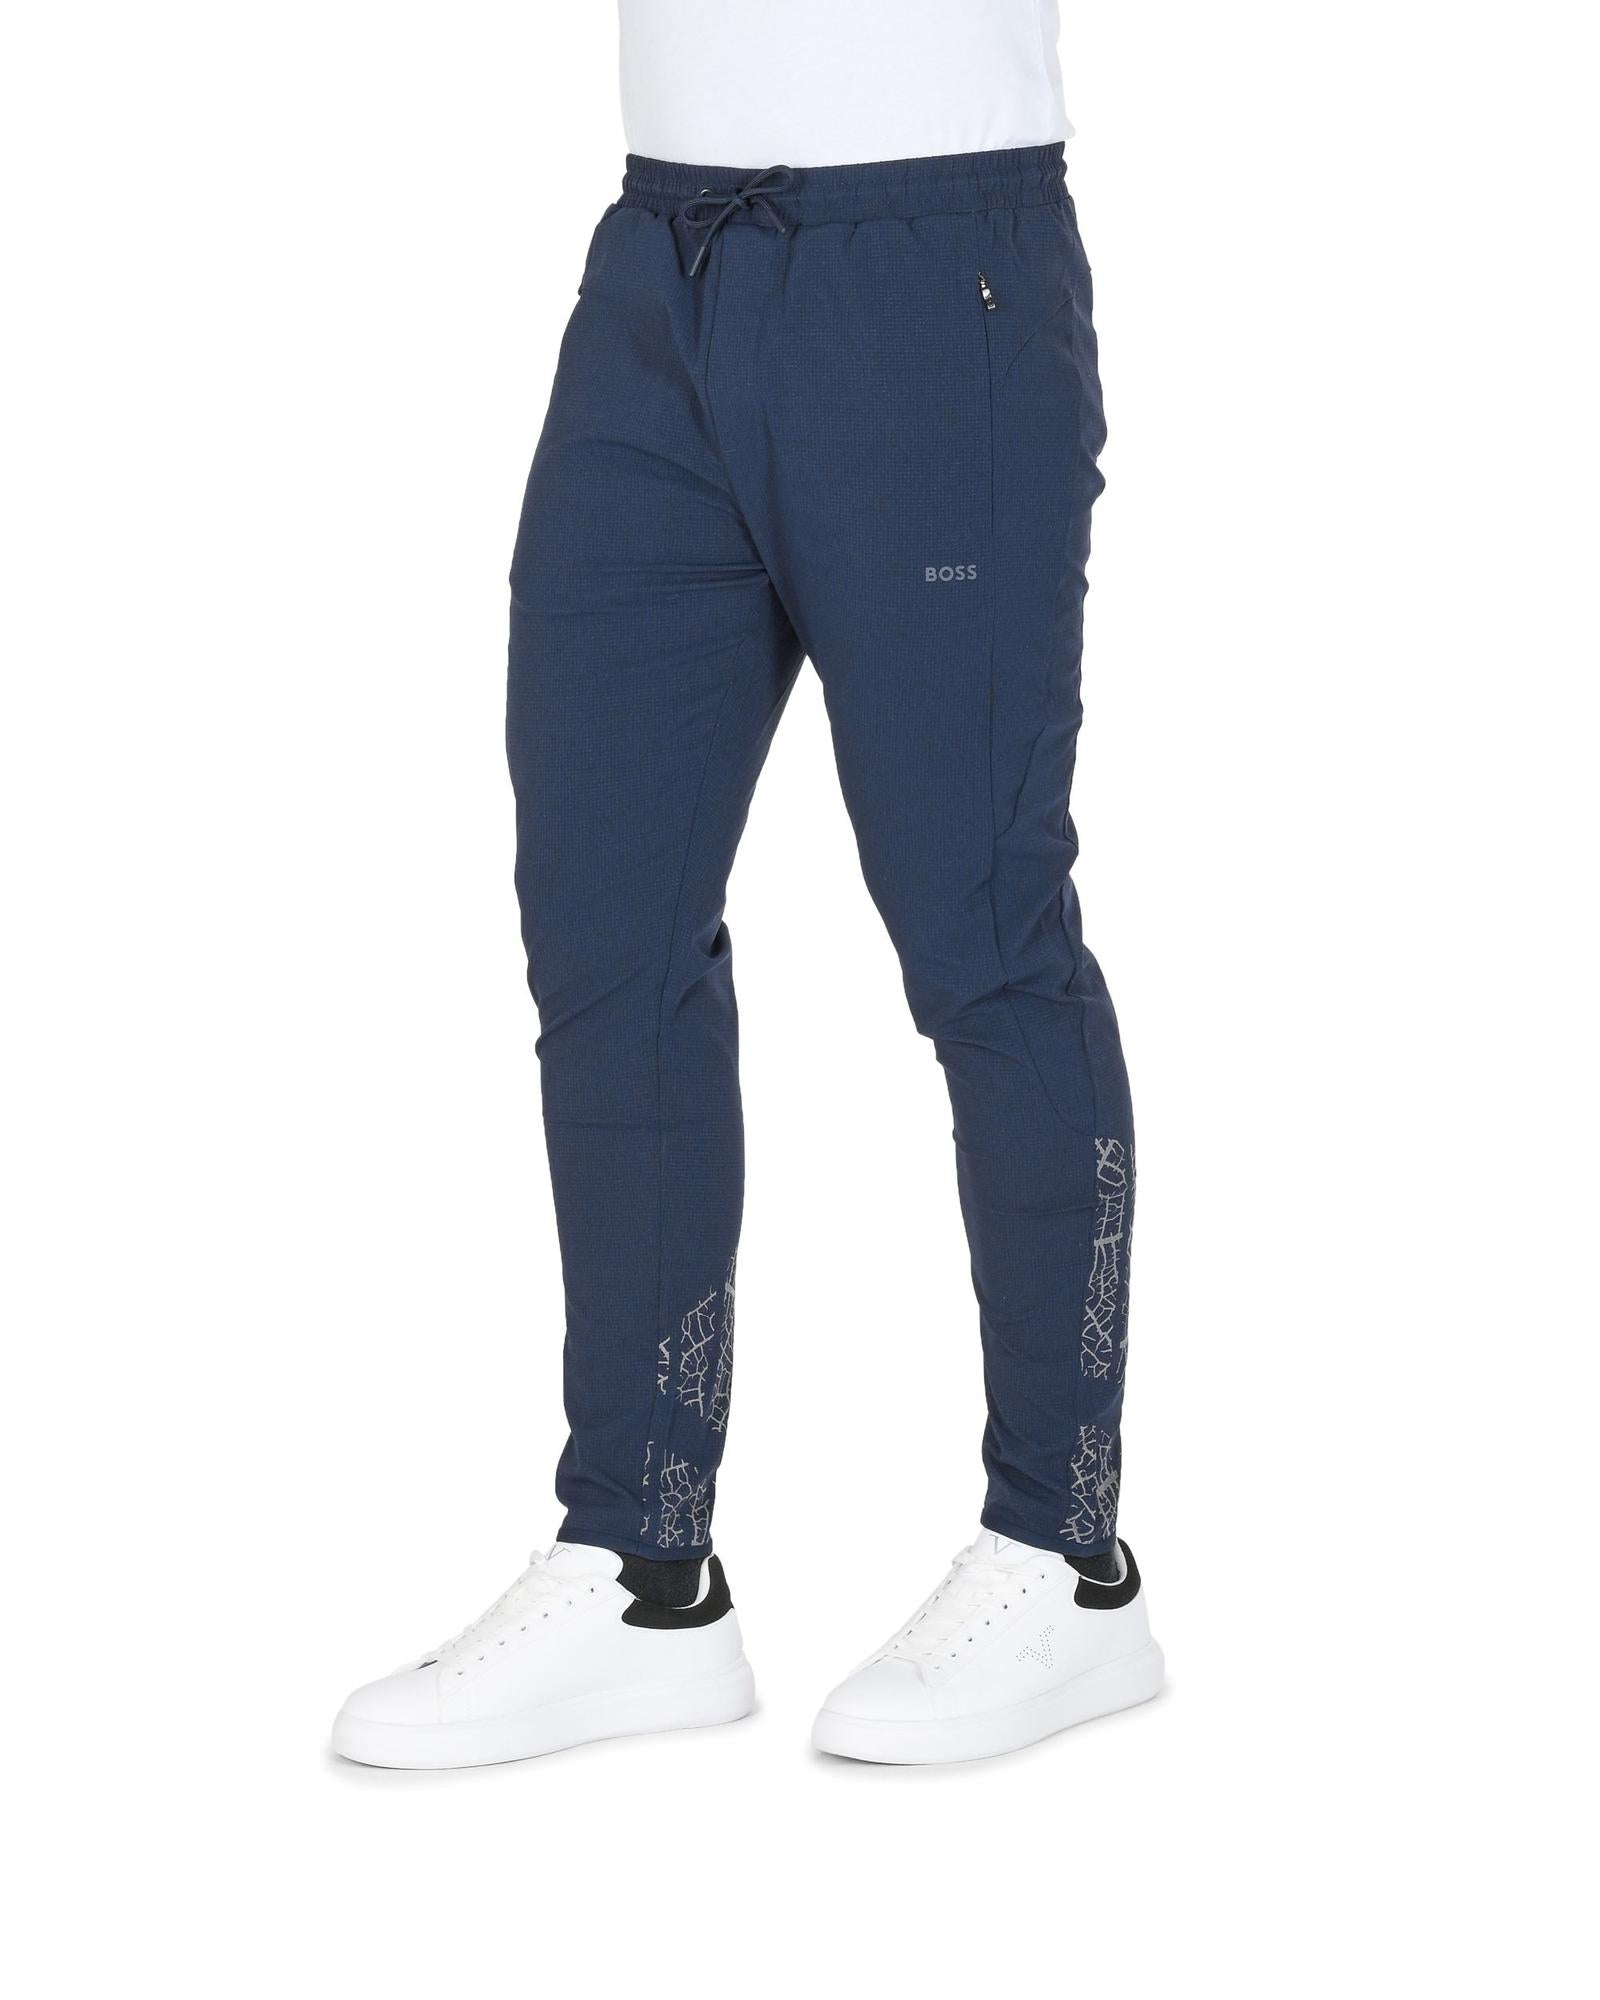 Hugo Boss Men's Recycled Polyester Navy Pants in Navy blue - L